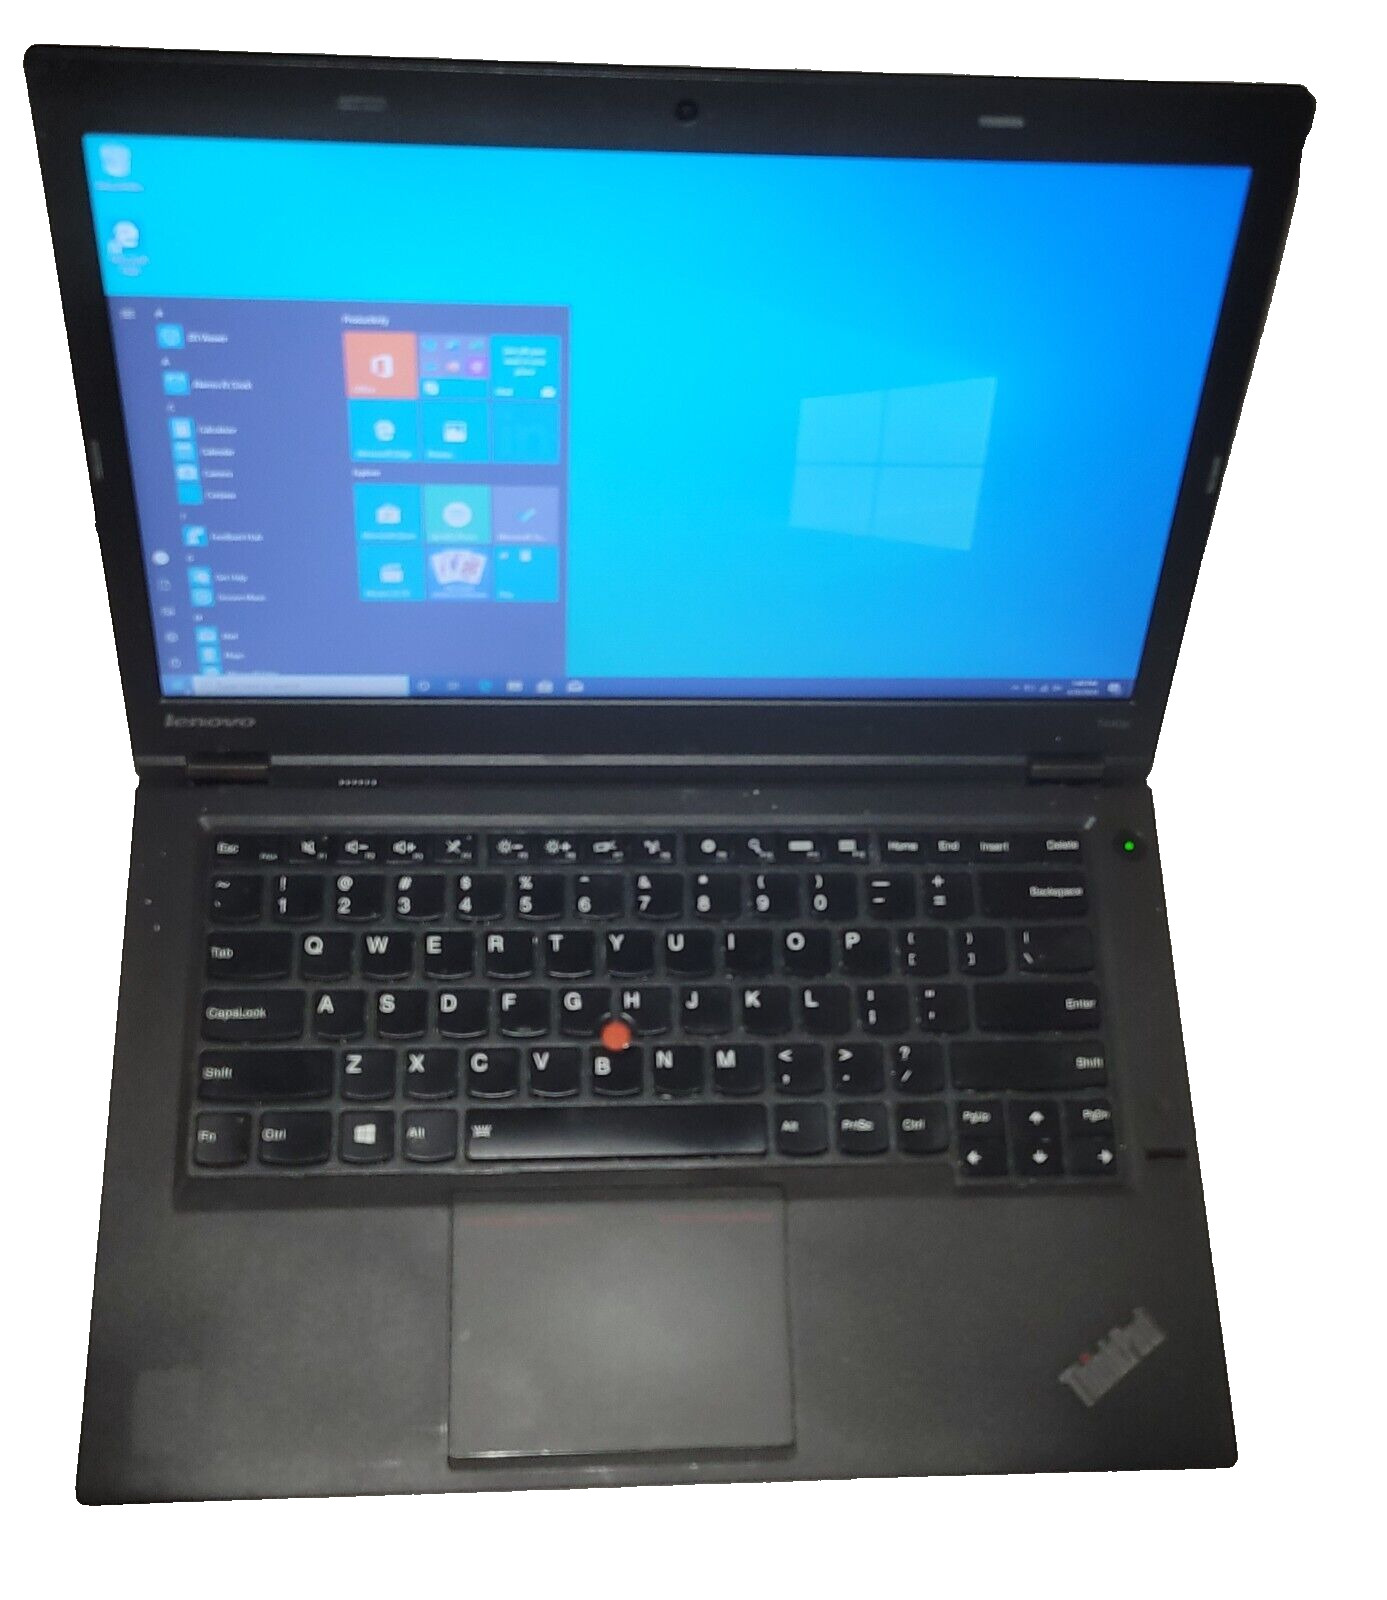 Lenovo ThinkPad T440p 2.6GHz Core i5 4300M CPU 4GB RAM 240GB SSD Win 10 Laptop